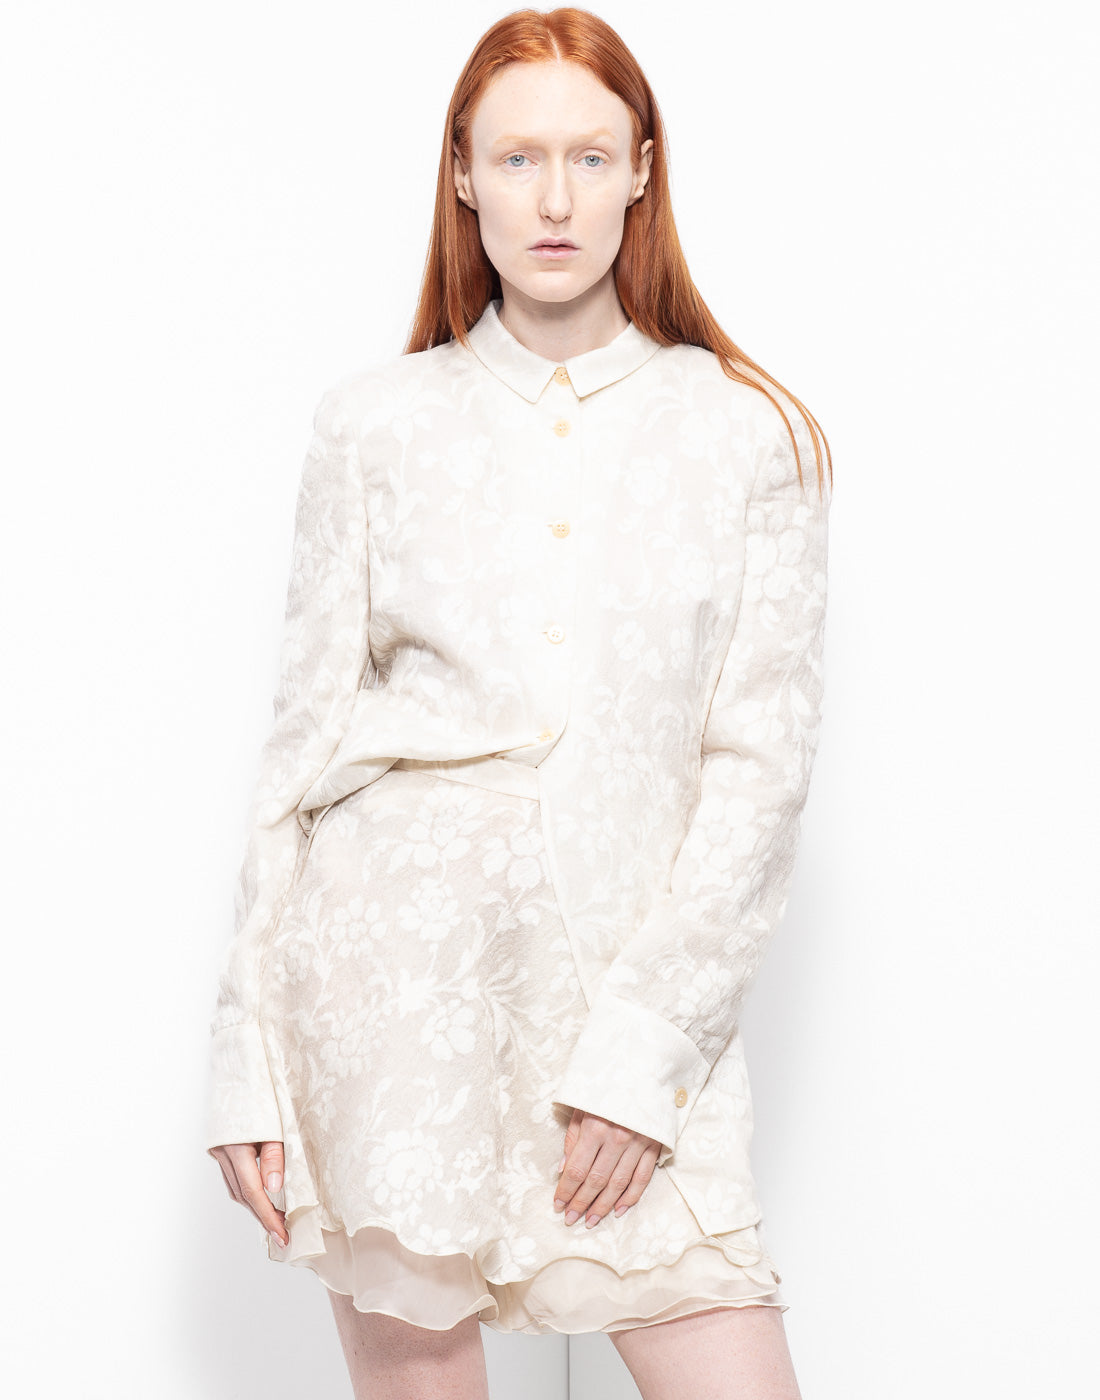 Vintage Armani white bermuda + shirt set with lace embellishment